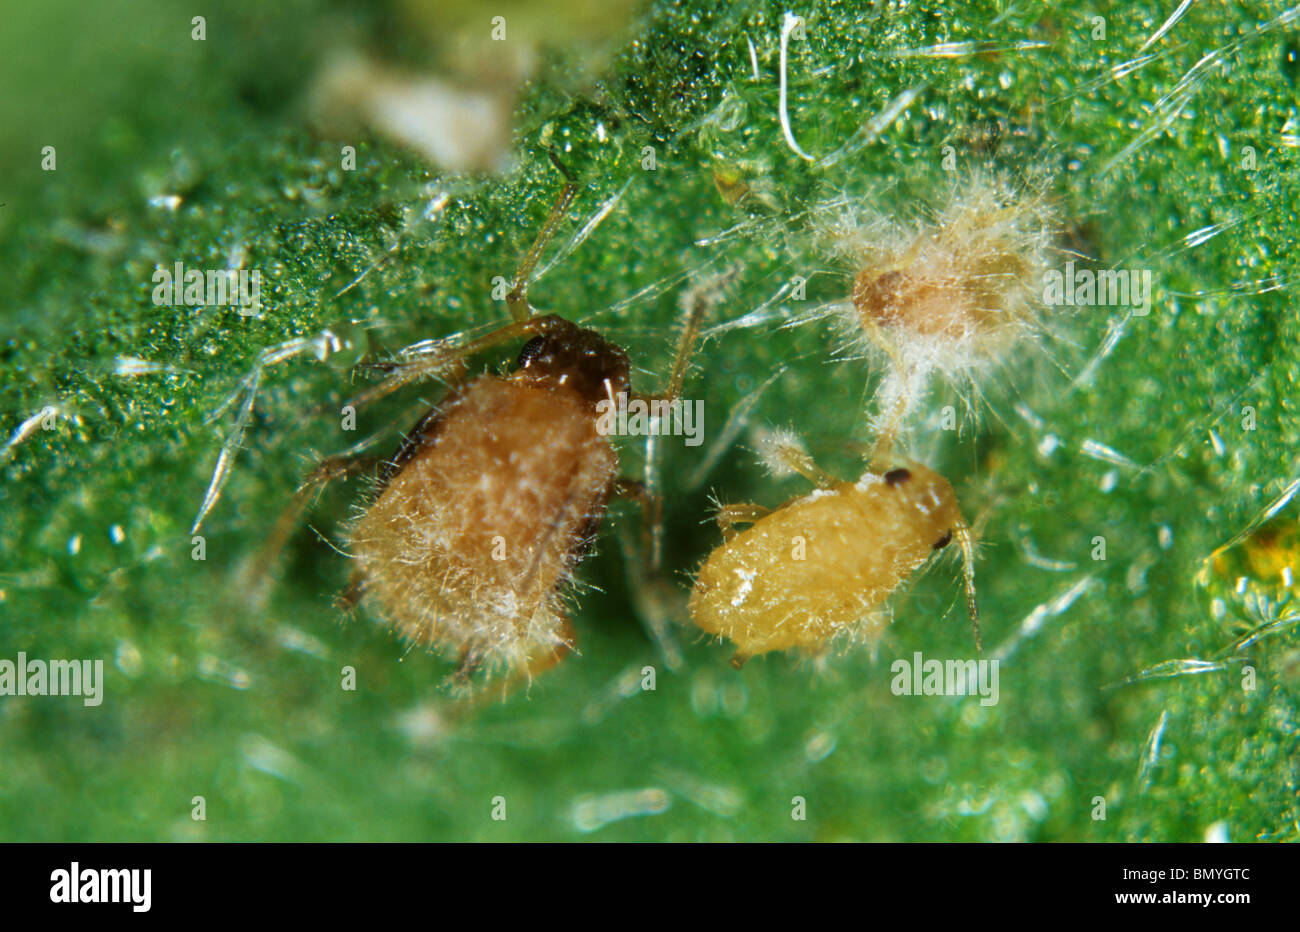 Early development of entomopathogenic fungus Verticillium lecanii on aphid host pests Stock Photo